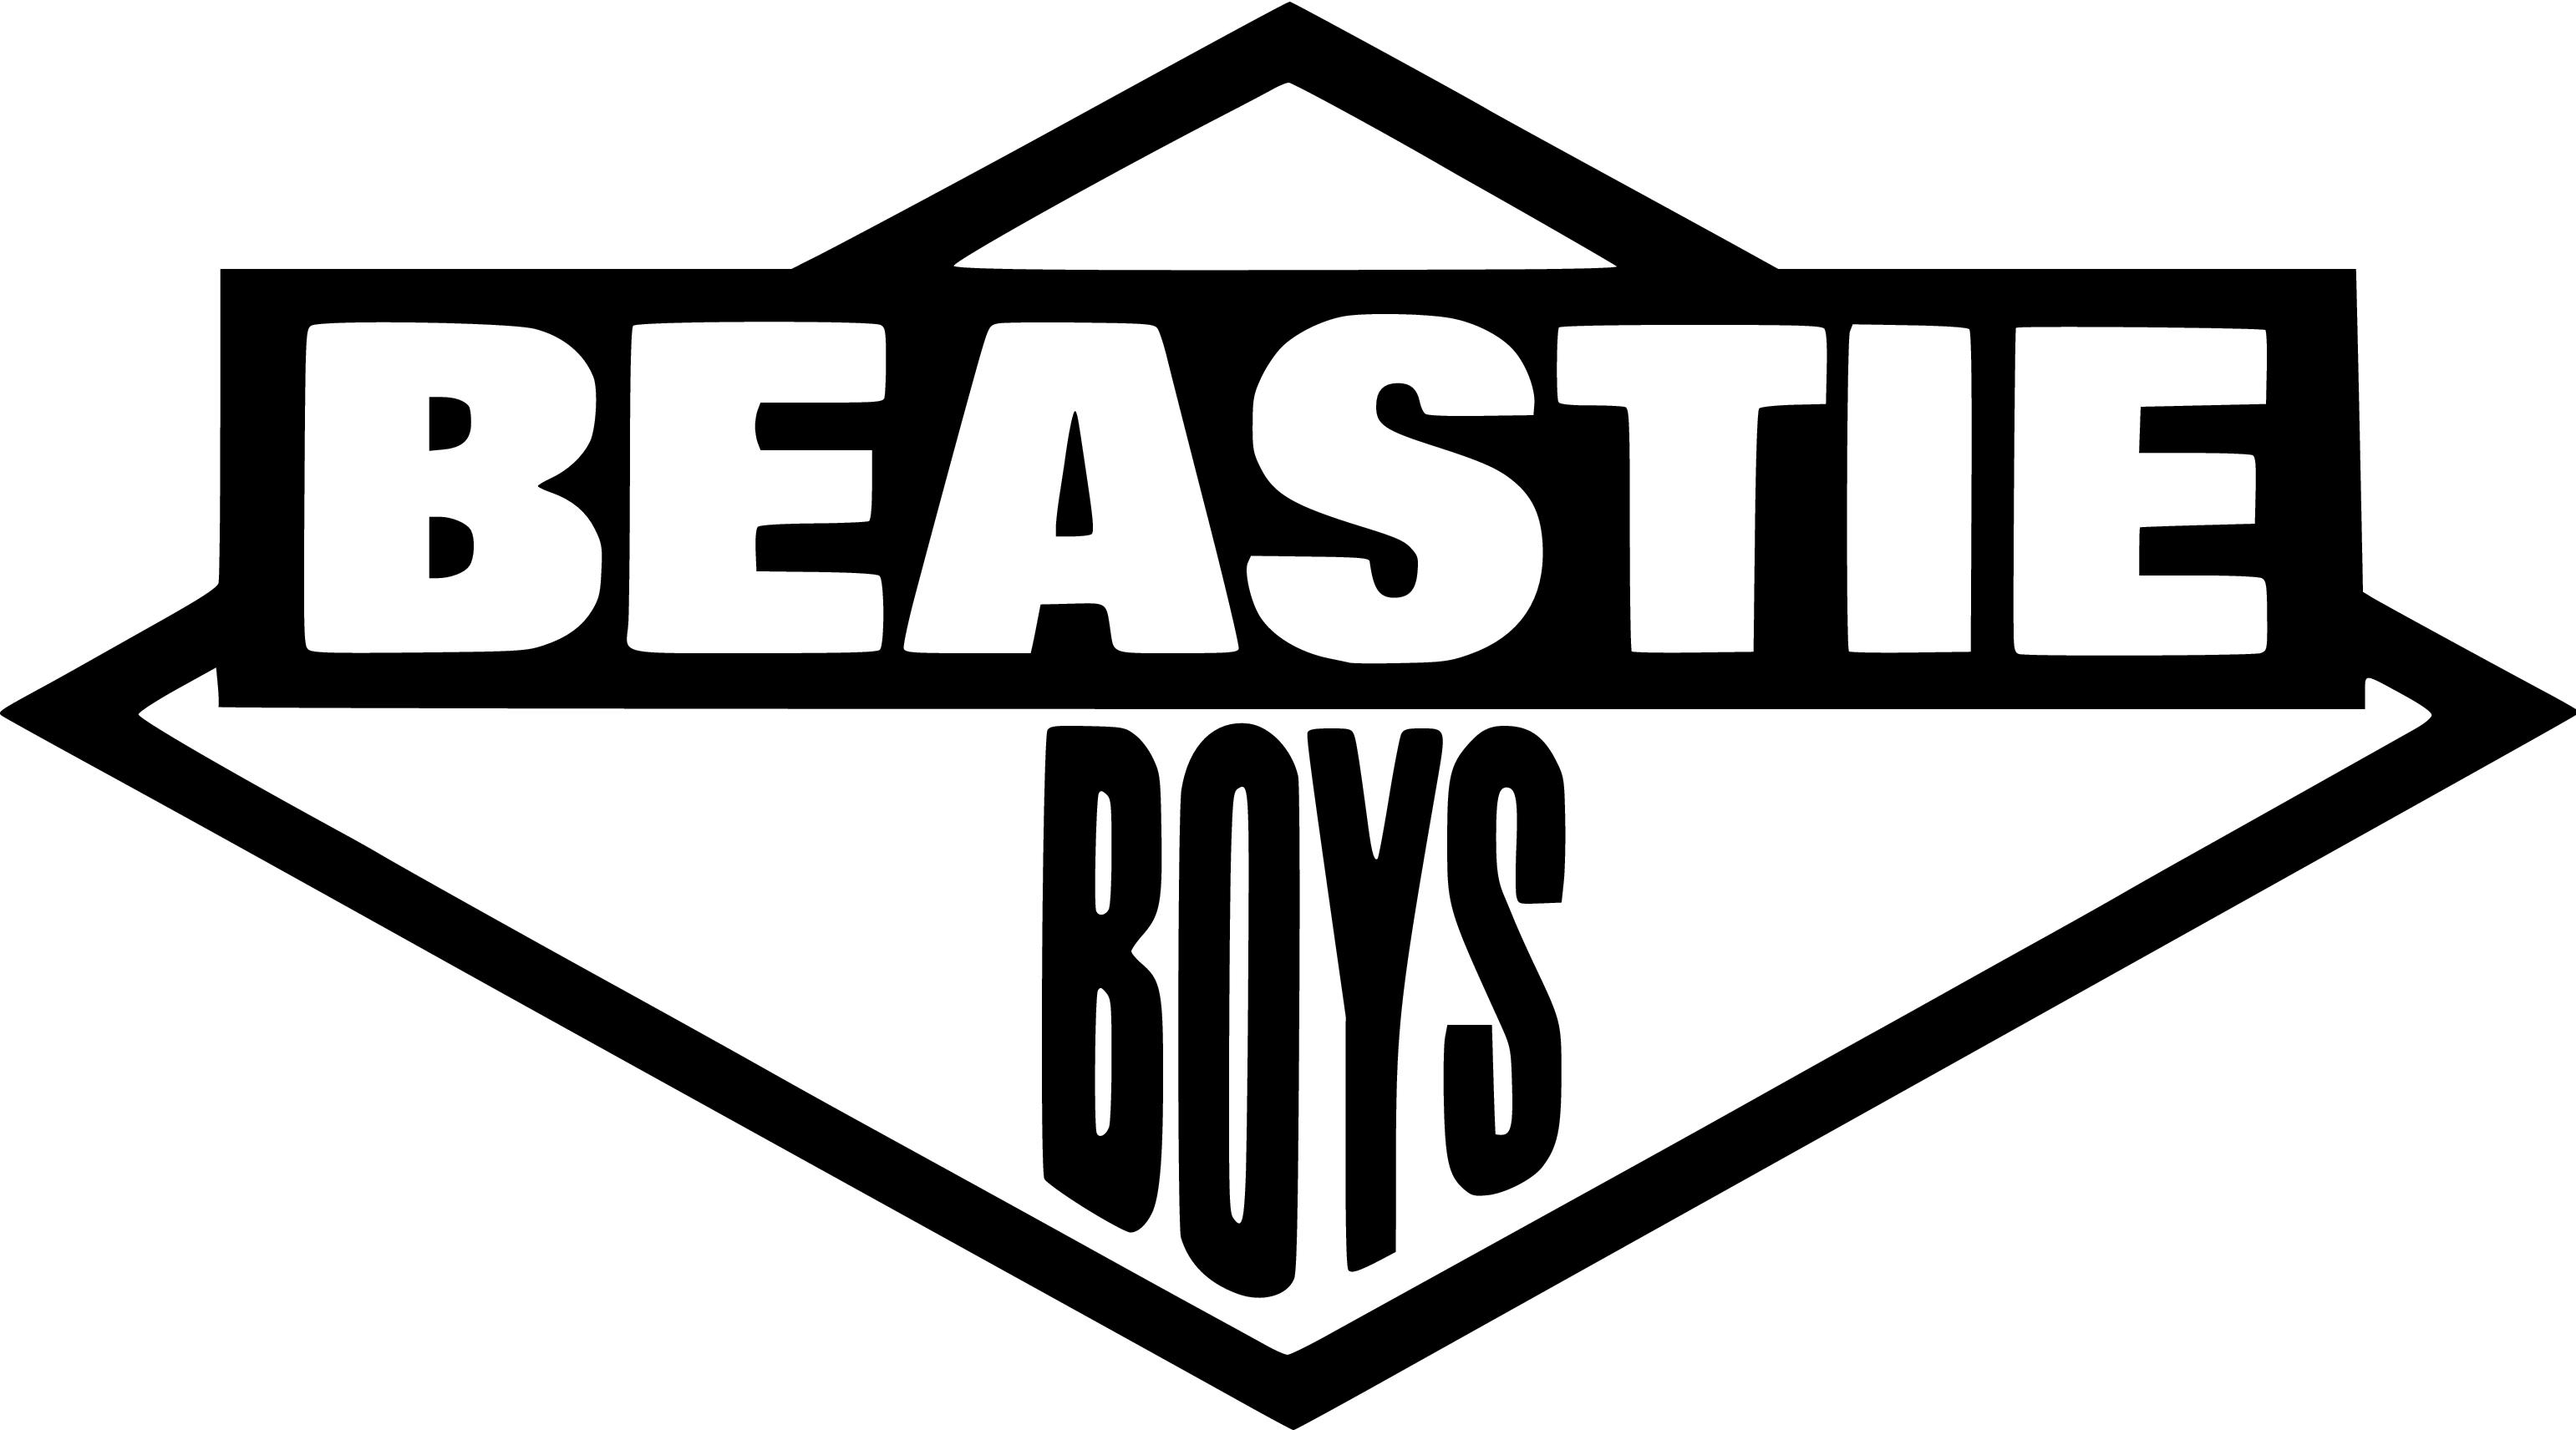 Beastie Boys Wallpapers